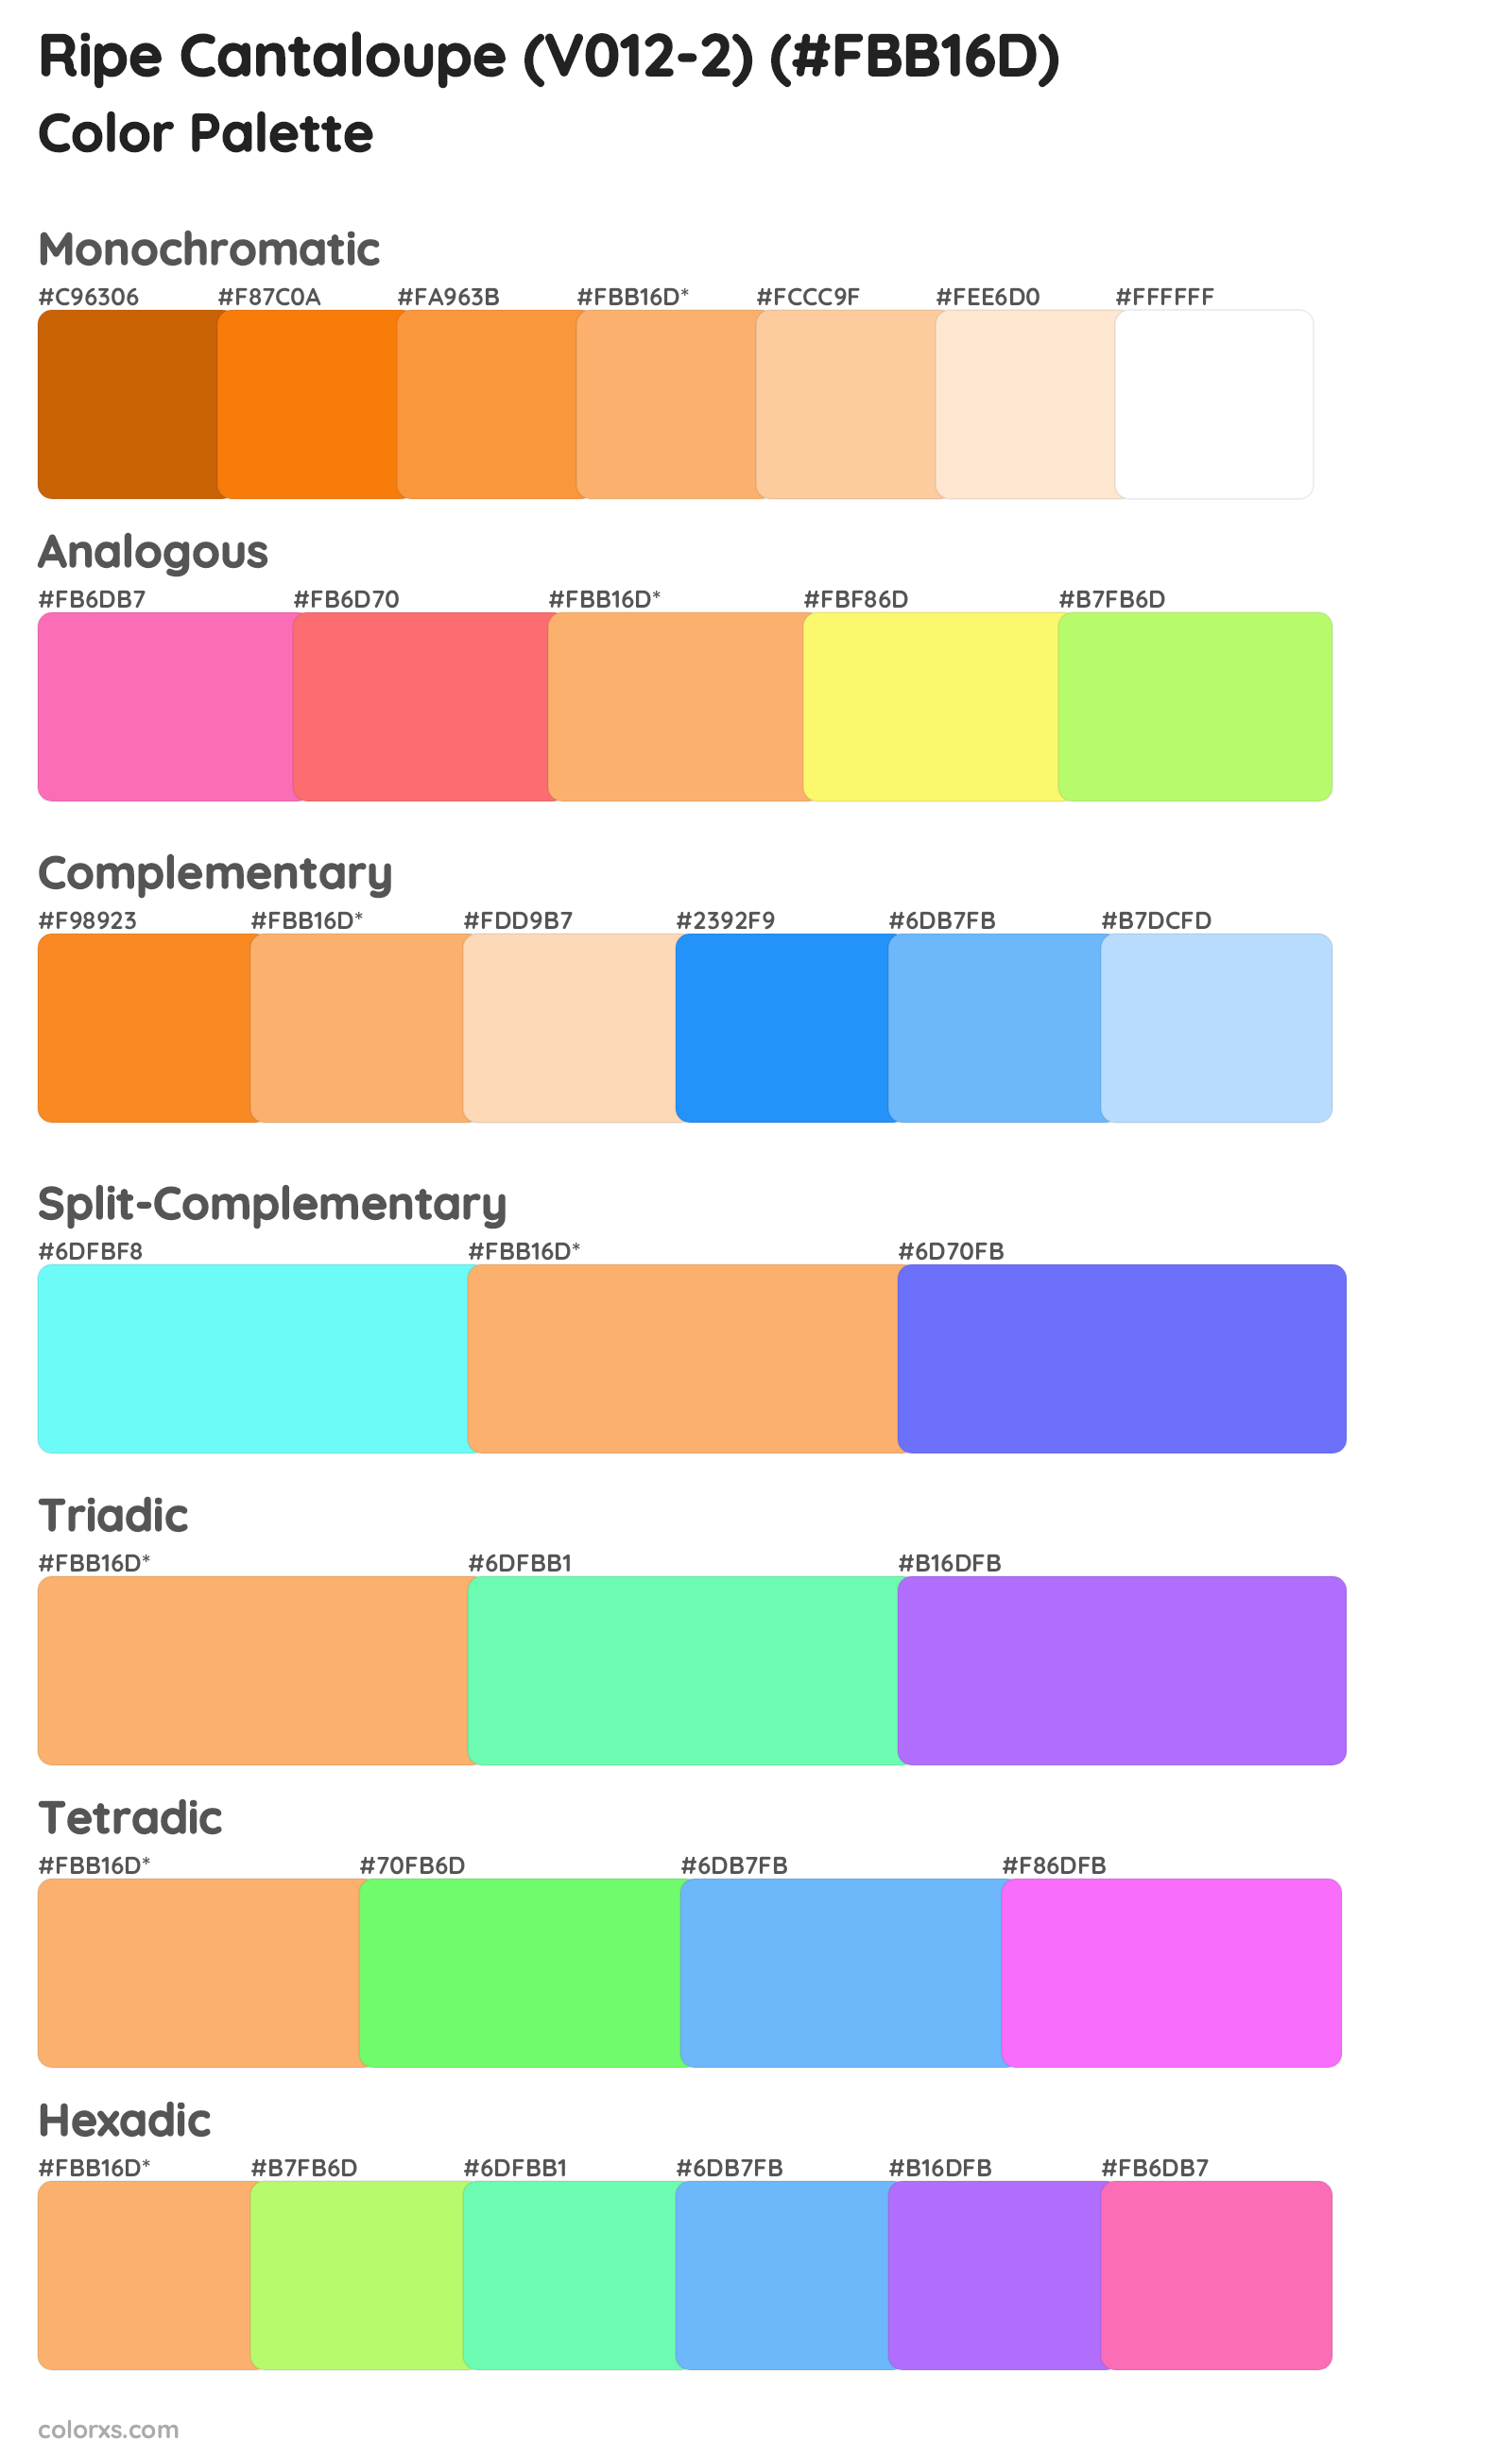 Ripe Cantaloupe (V012-2) Color Scheme Palettes